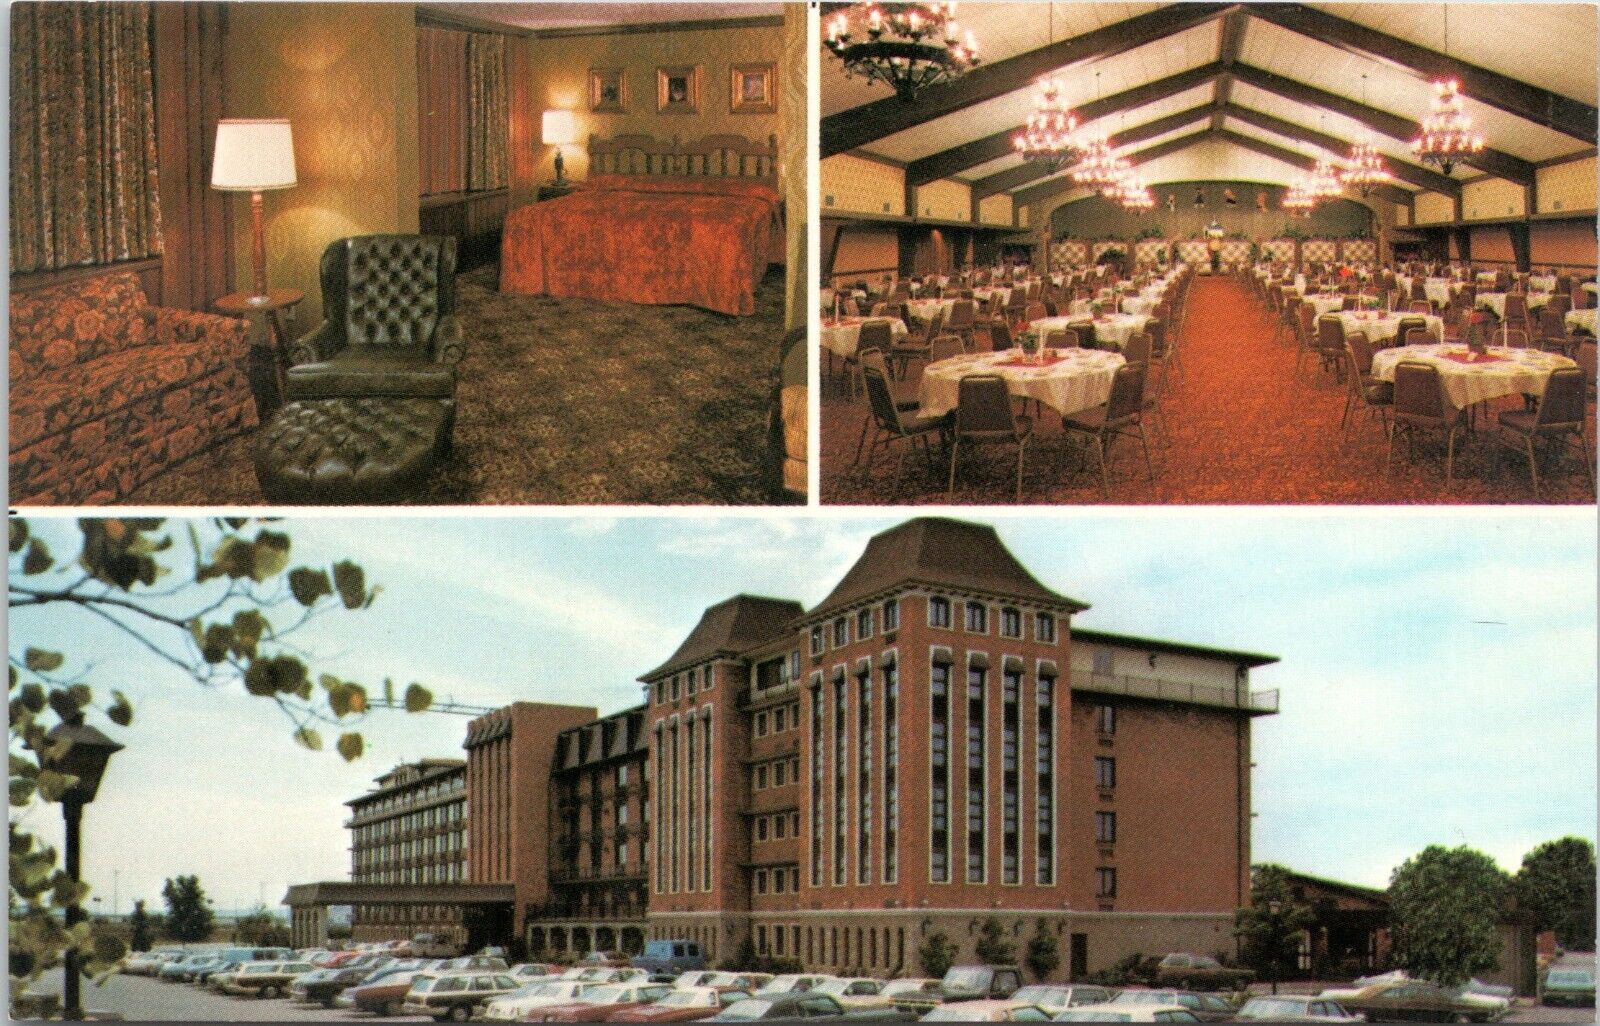 Executive West Motel, Louisville, Kentucky - c1970s Chrome Postcard